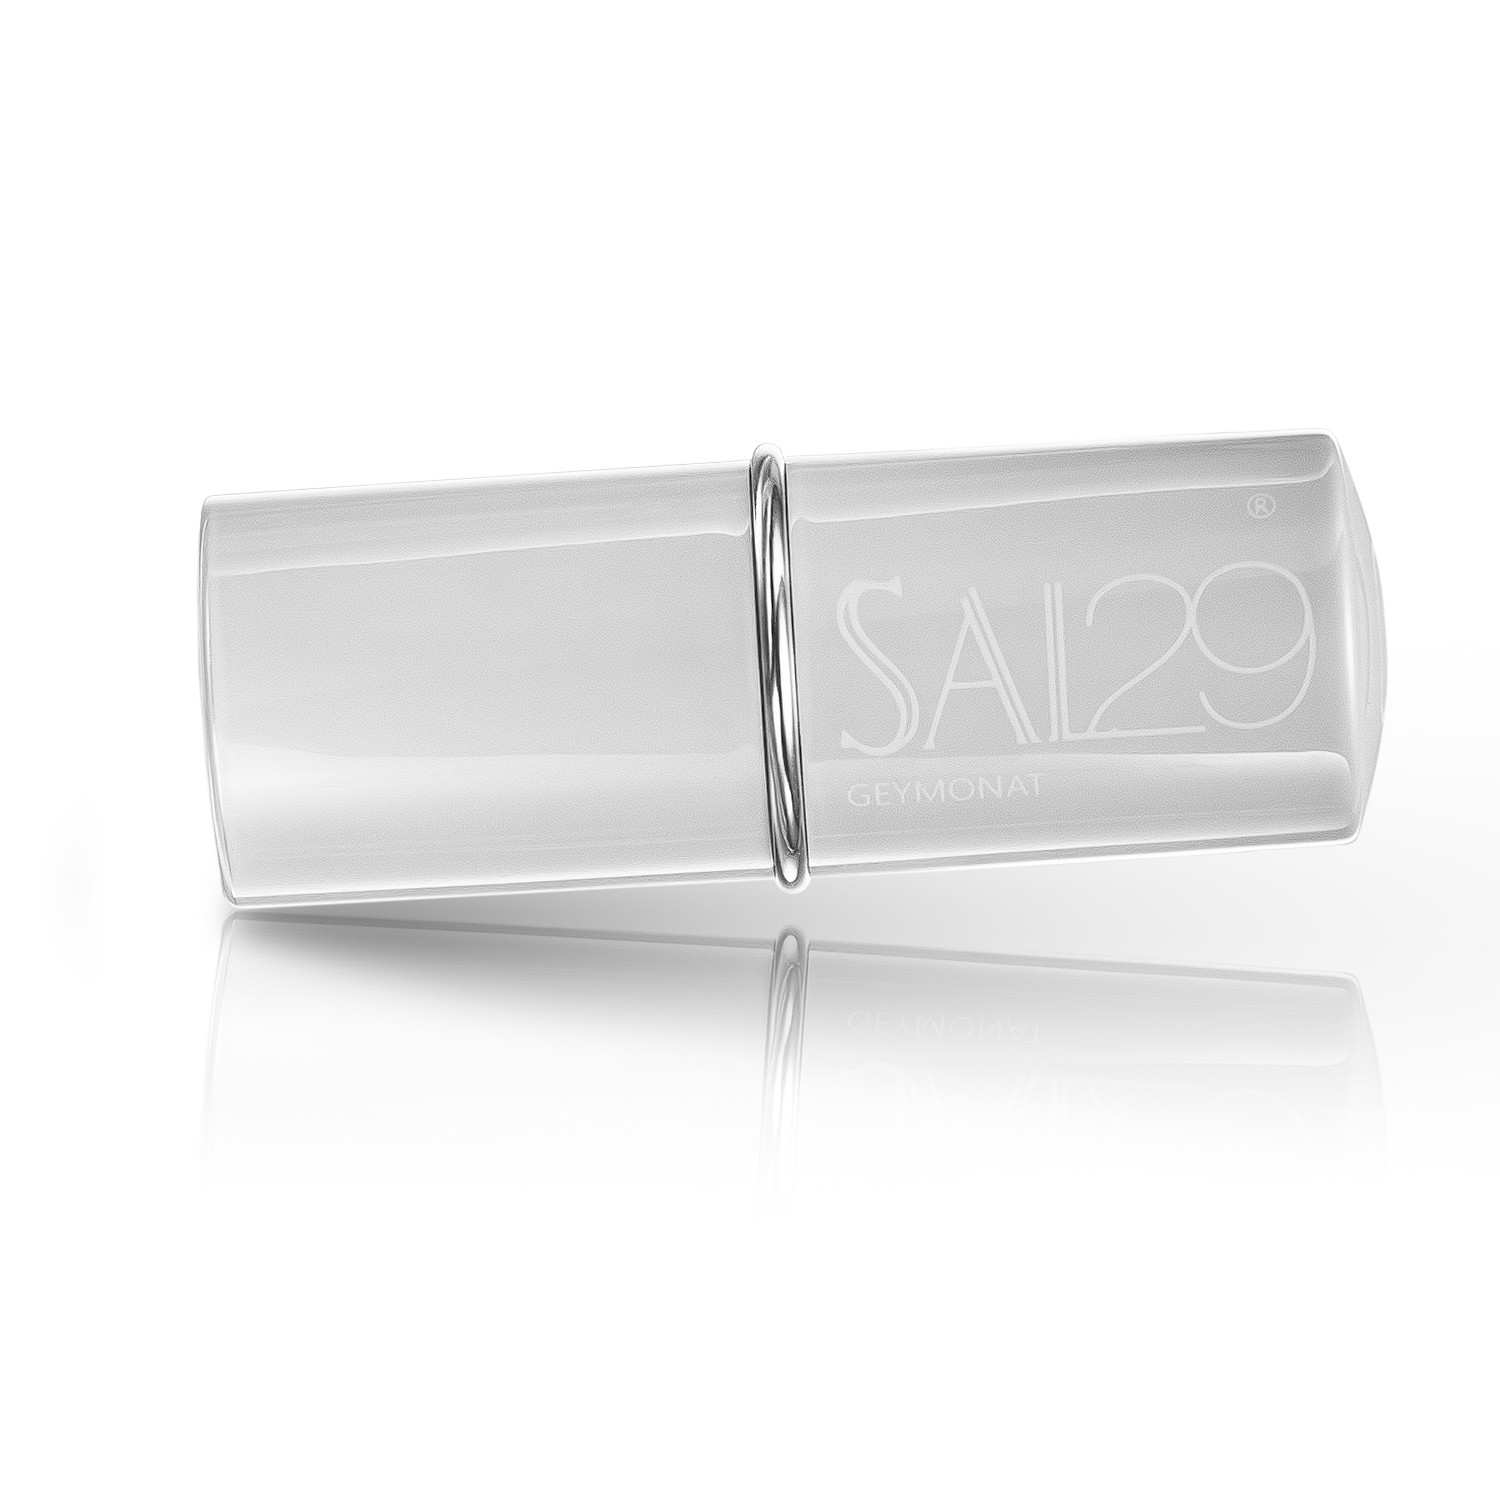 SAL 29 Perfect lips